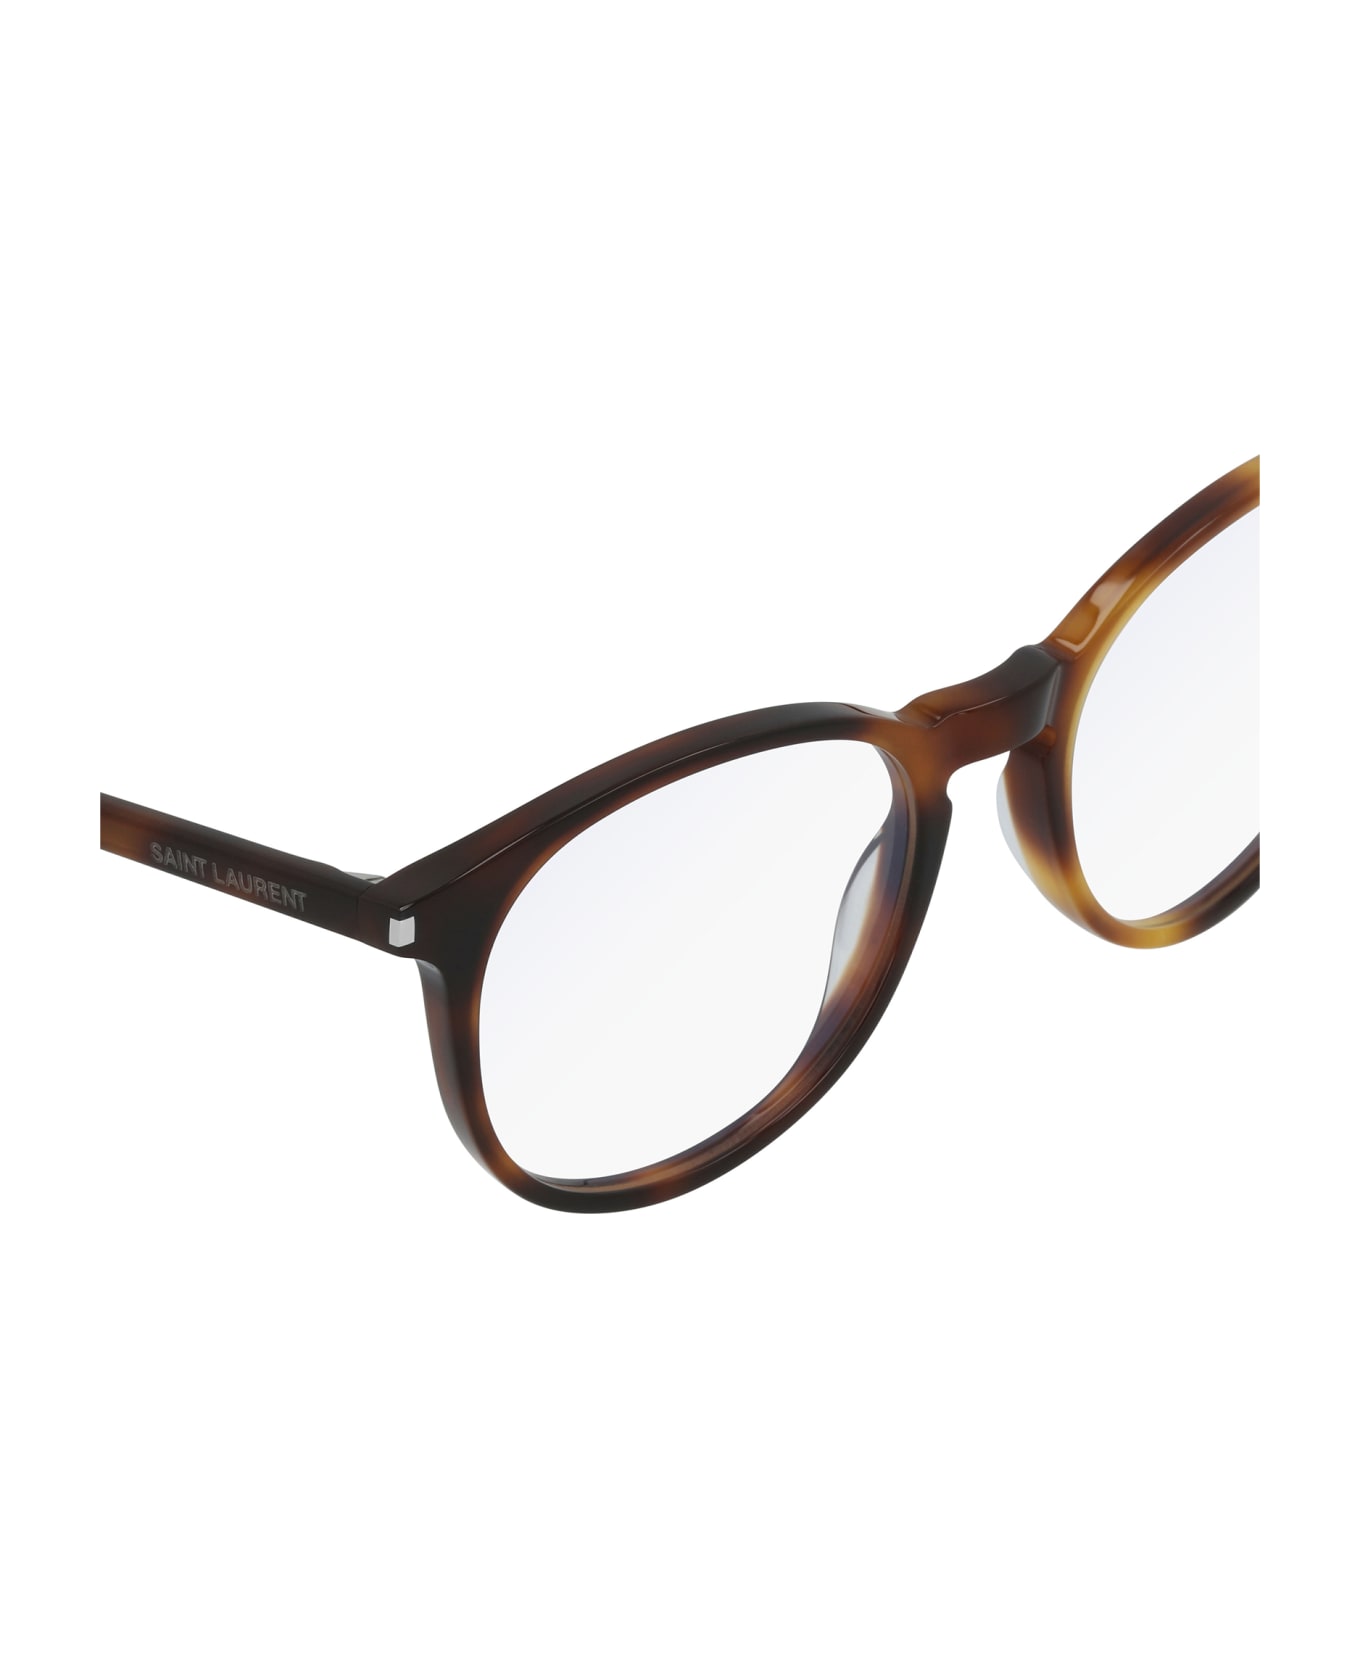 Saint Laurent Eyewear Sl 106 002 Glasses - 002